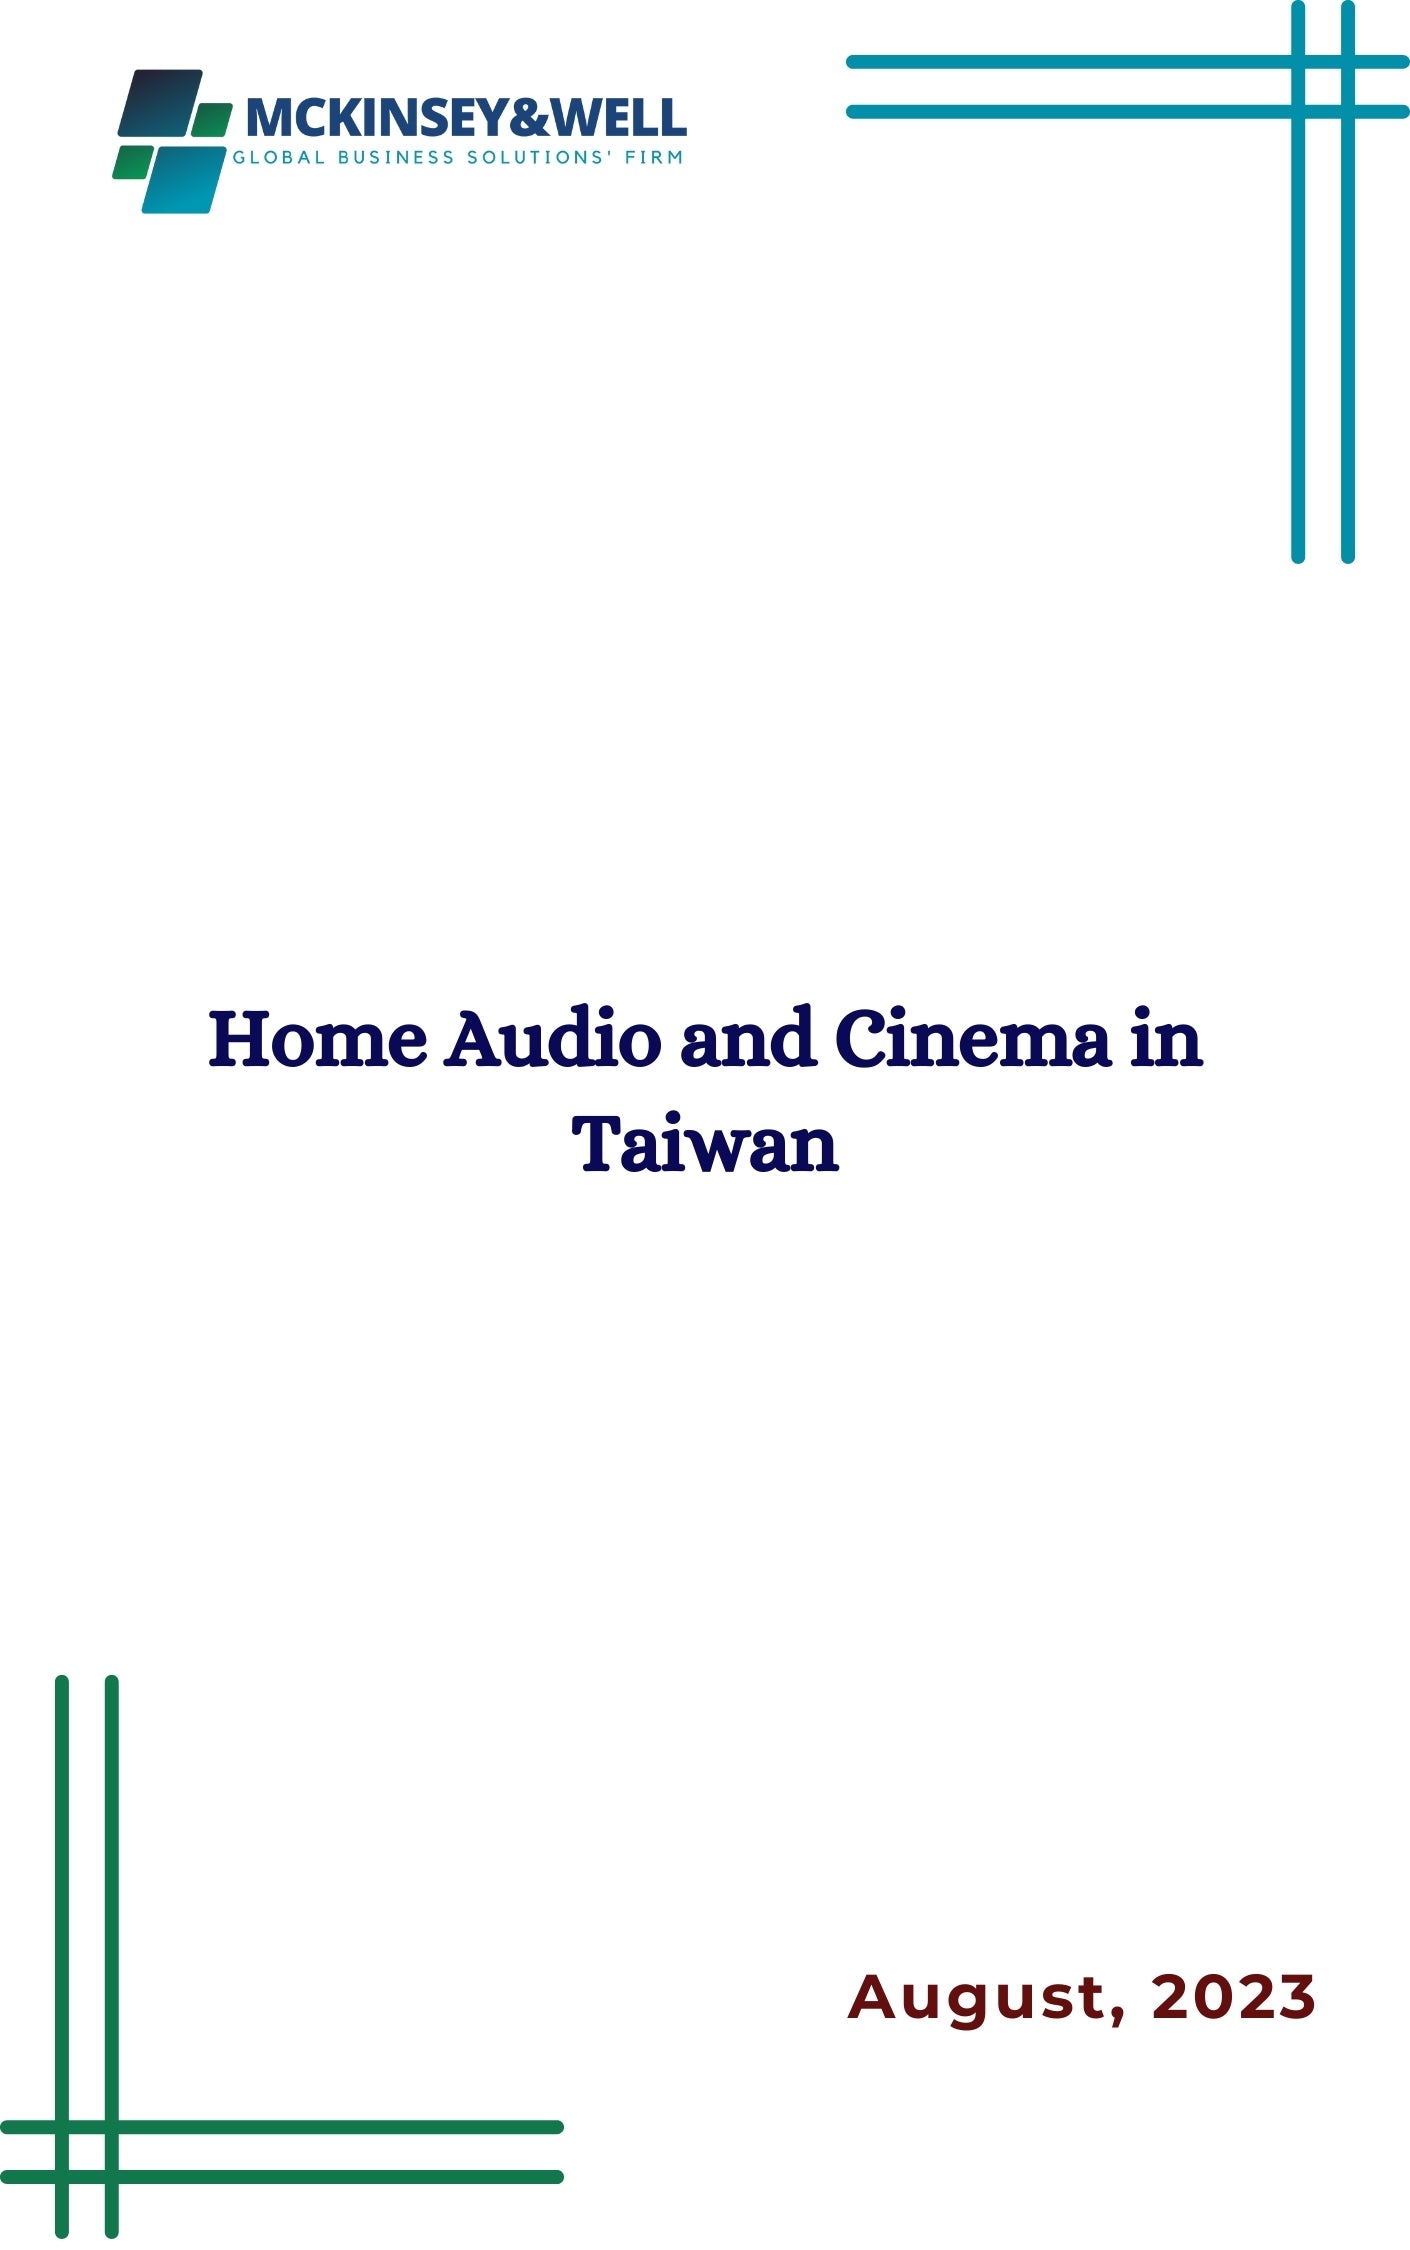 Home Audio and Cinema in Taiwan